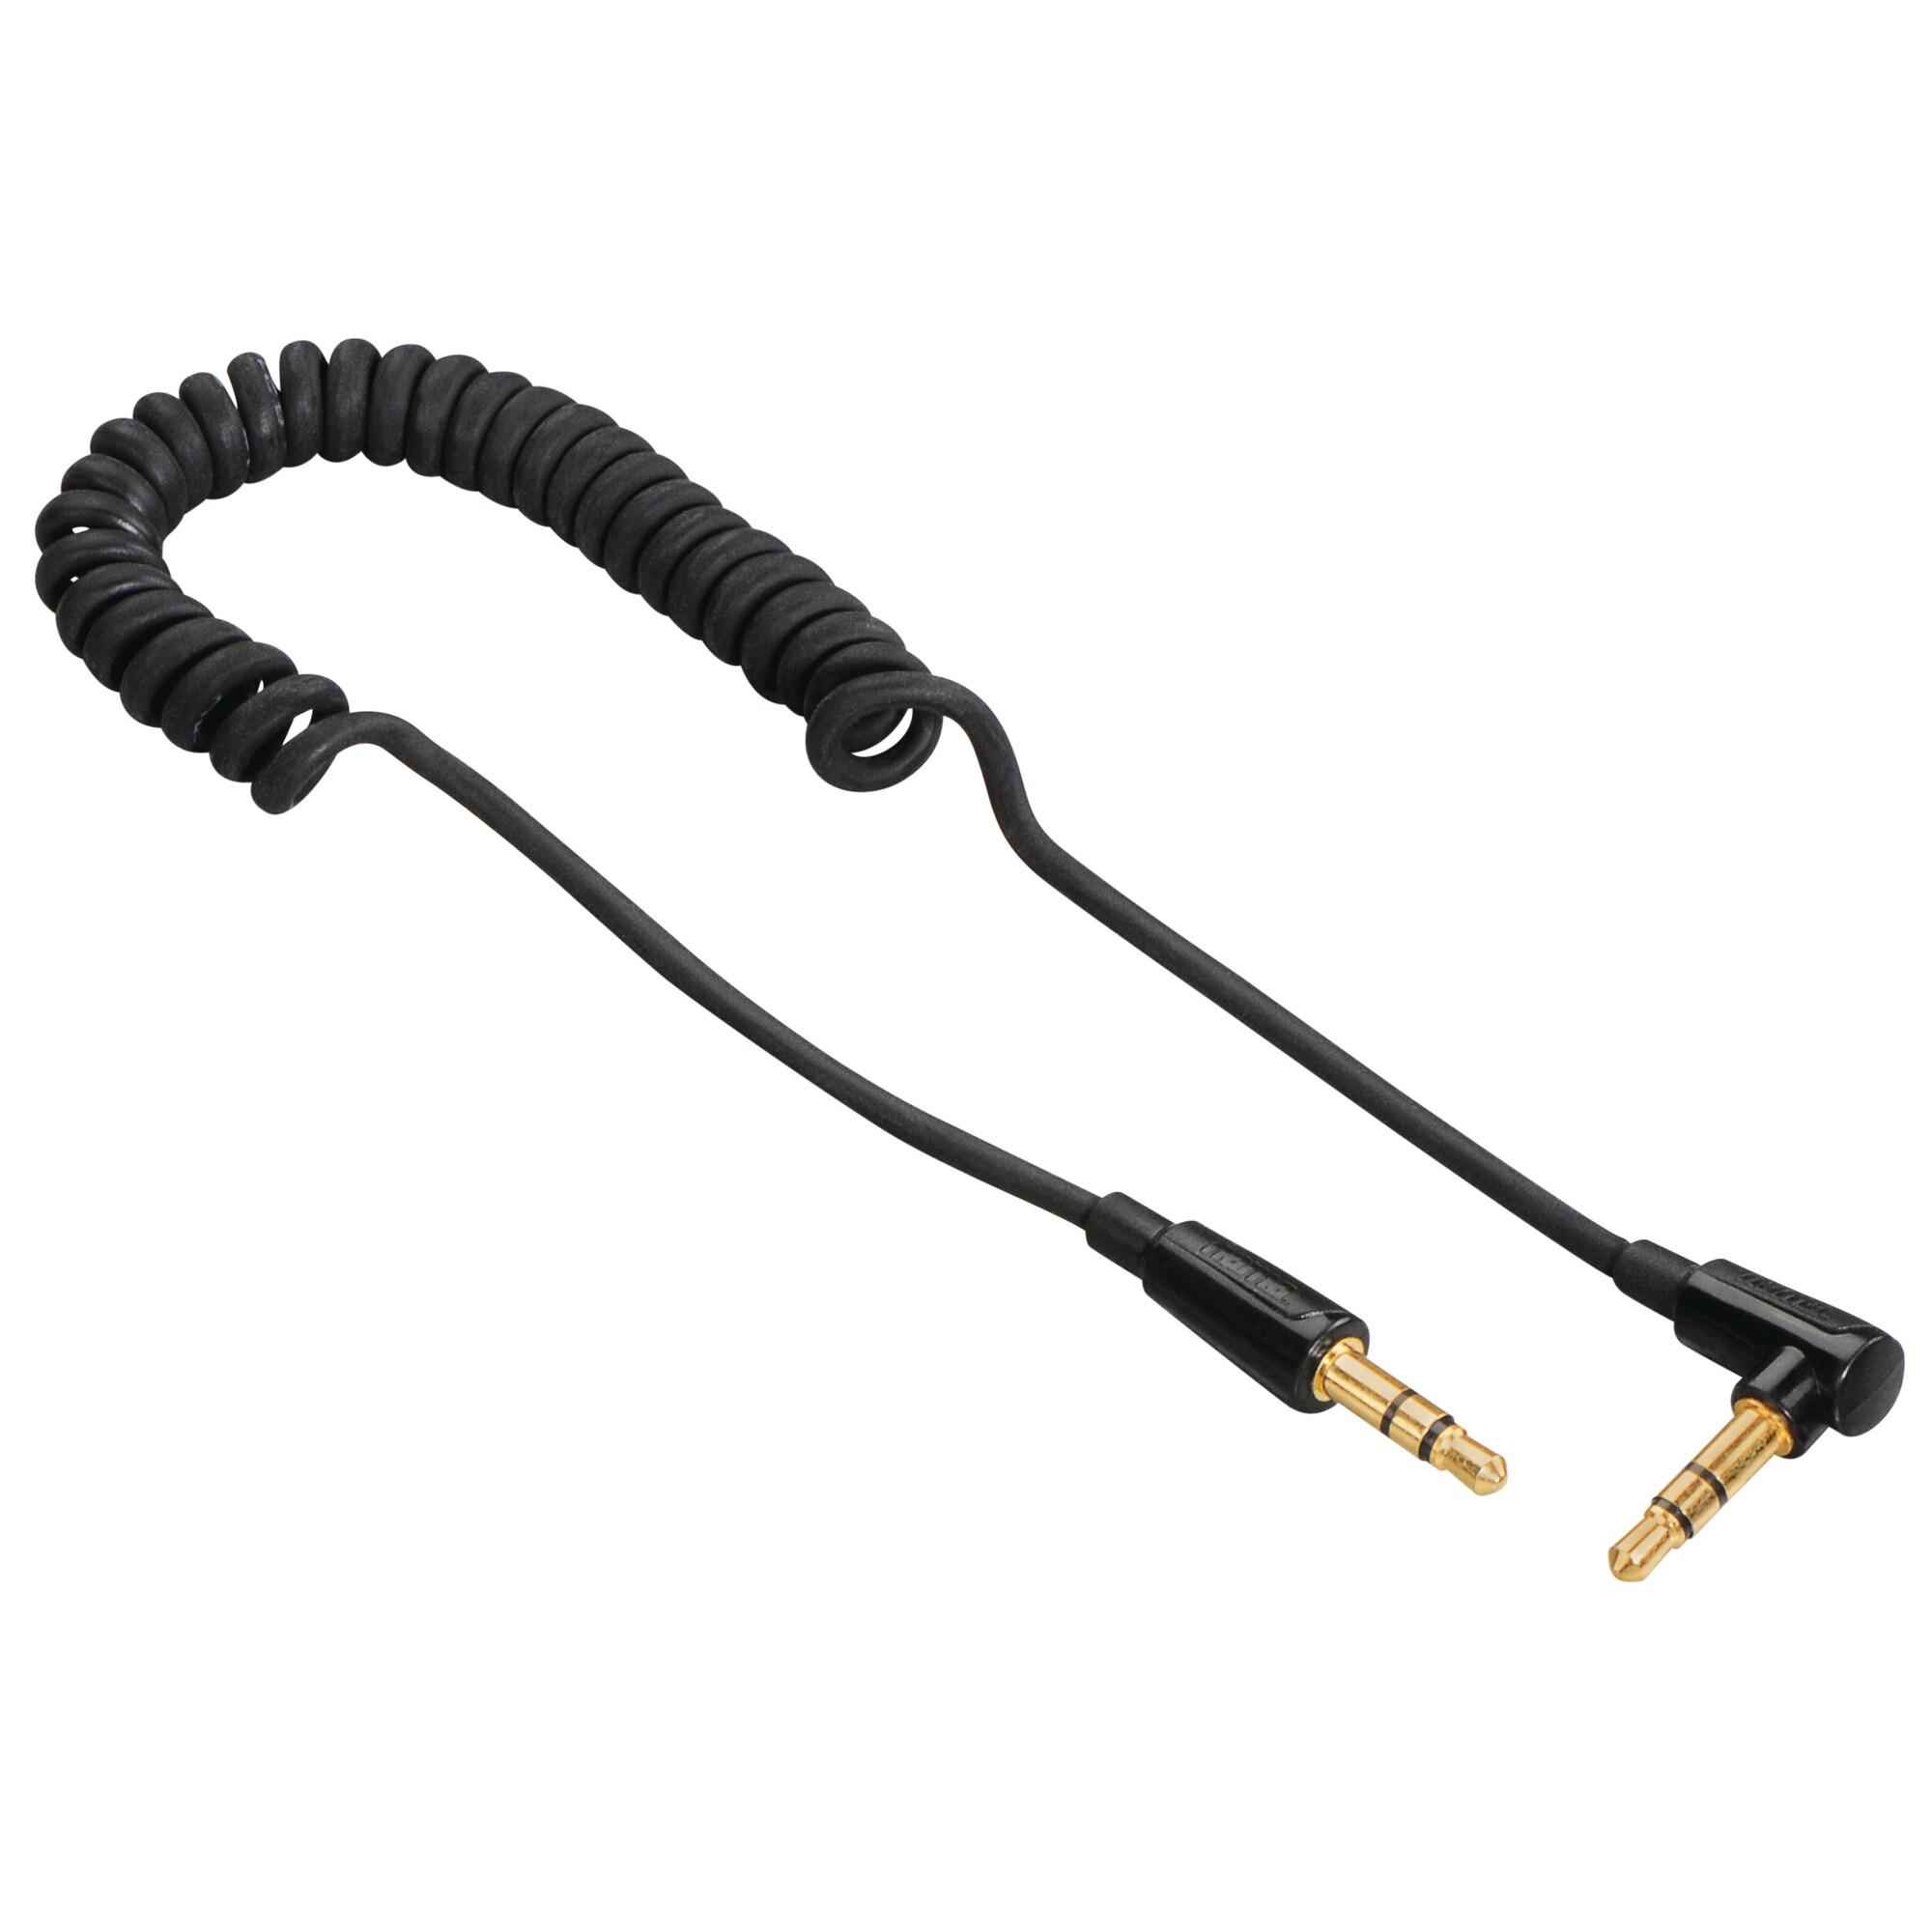 Hama Flexi-slim 3,5 mm kabel - oprullet ledning (1,5 m) | Elgiganten